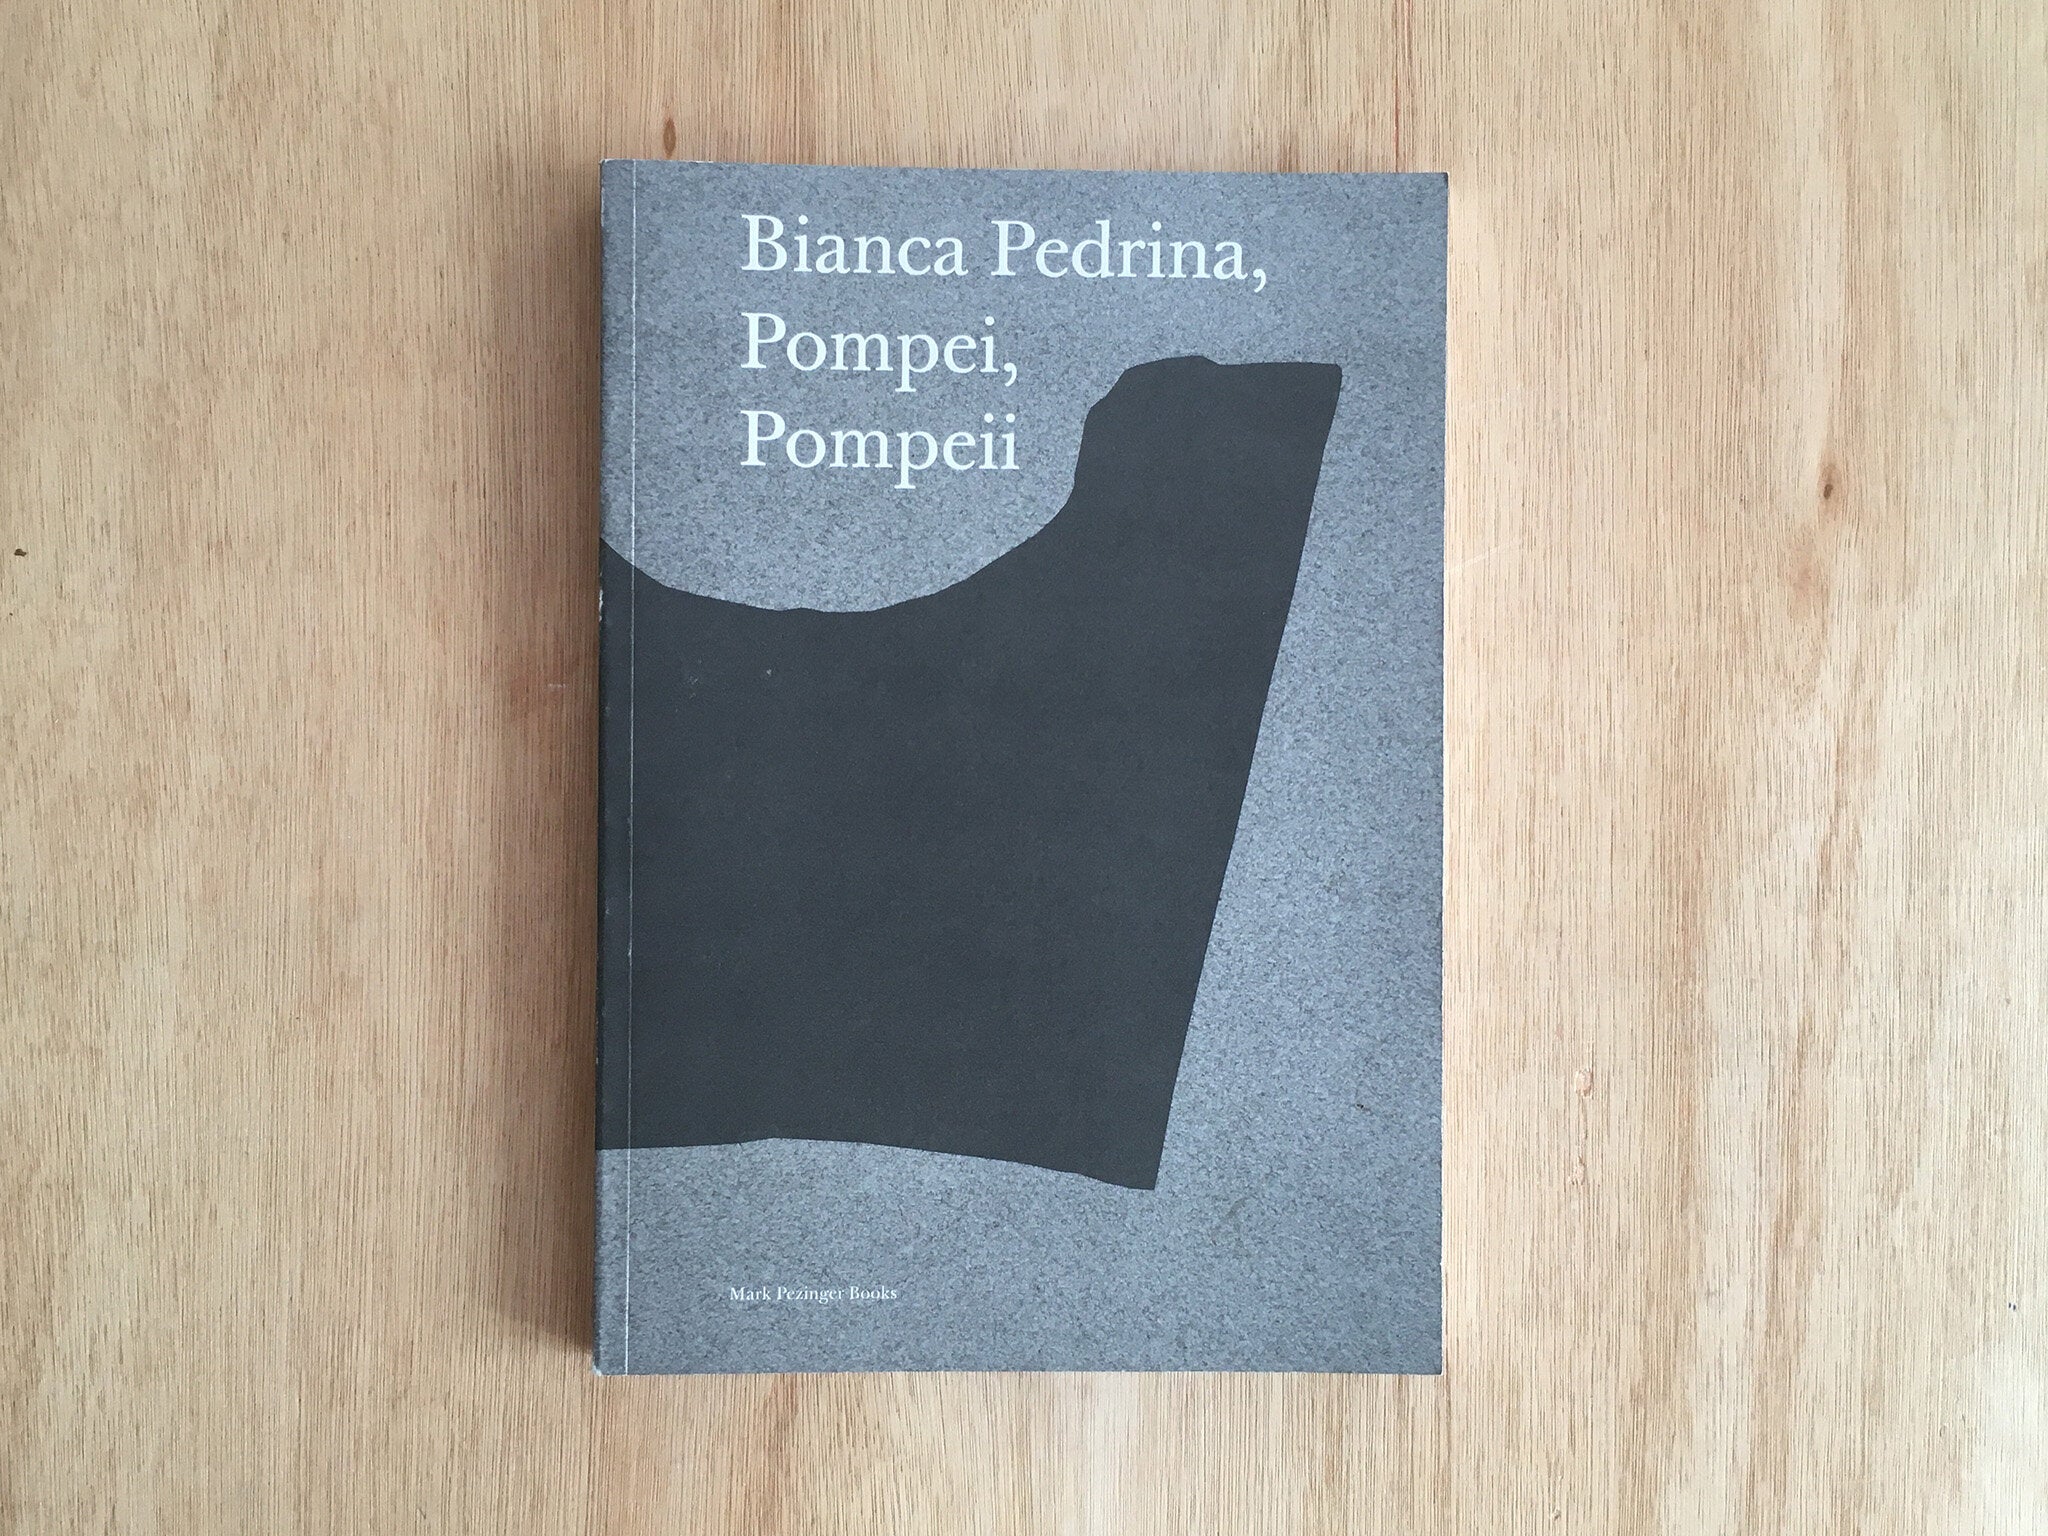 POMPEI, POMPEII by Bianca Pedrina